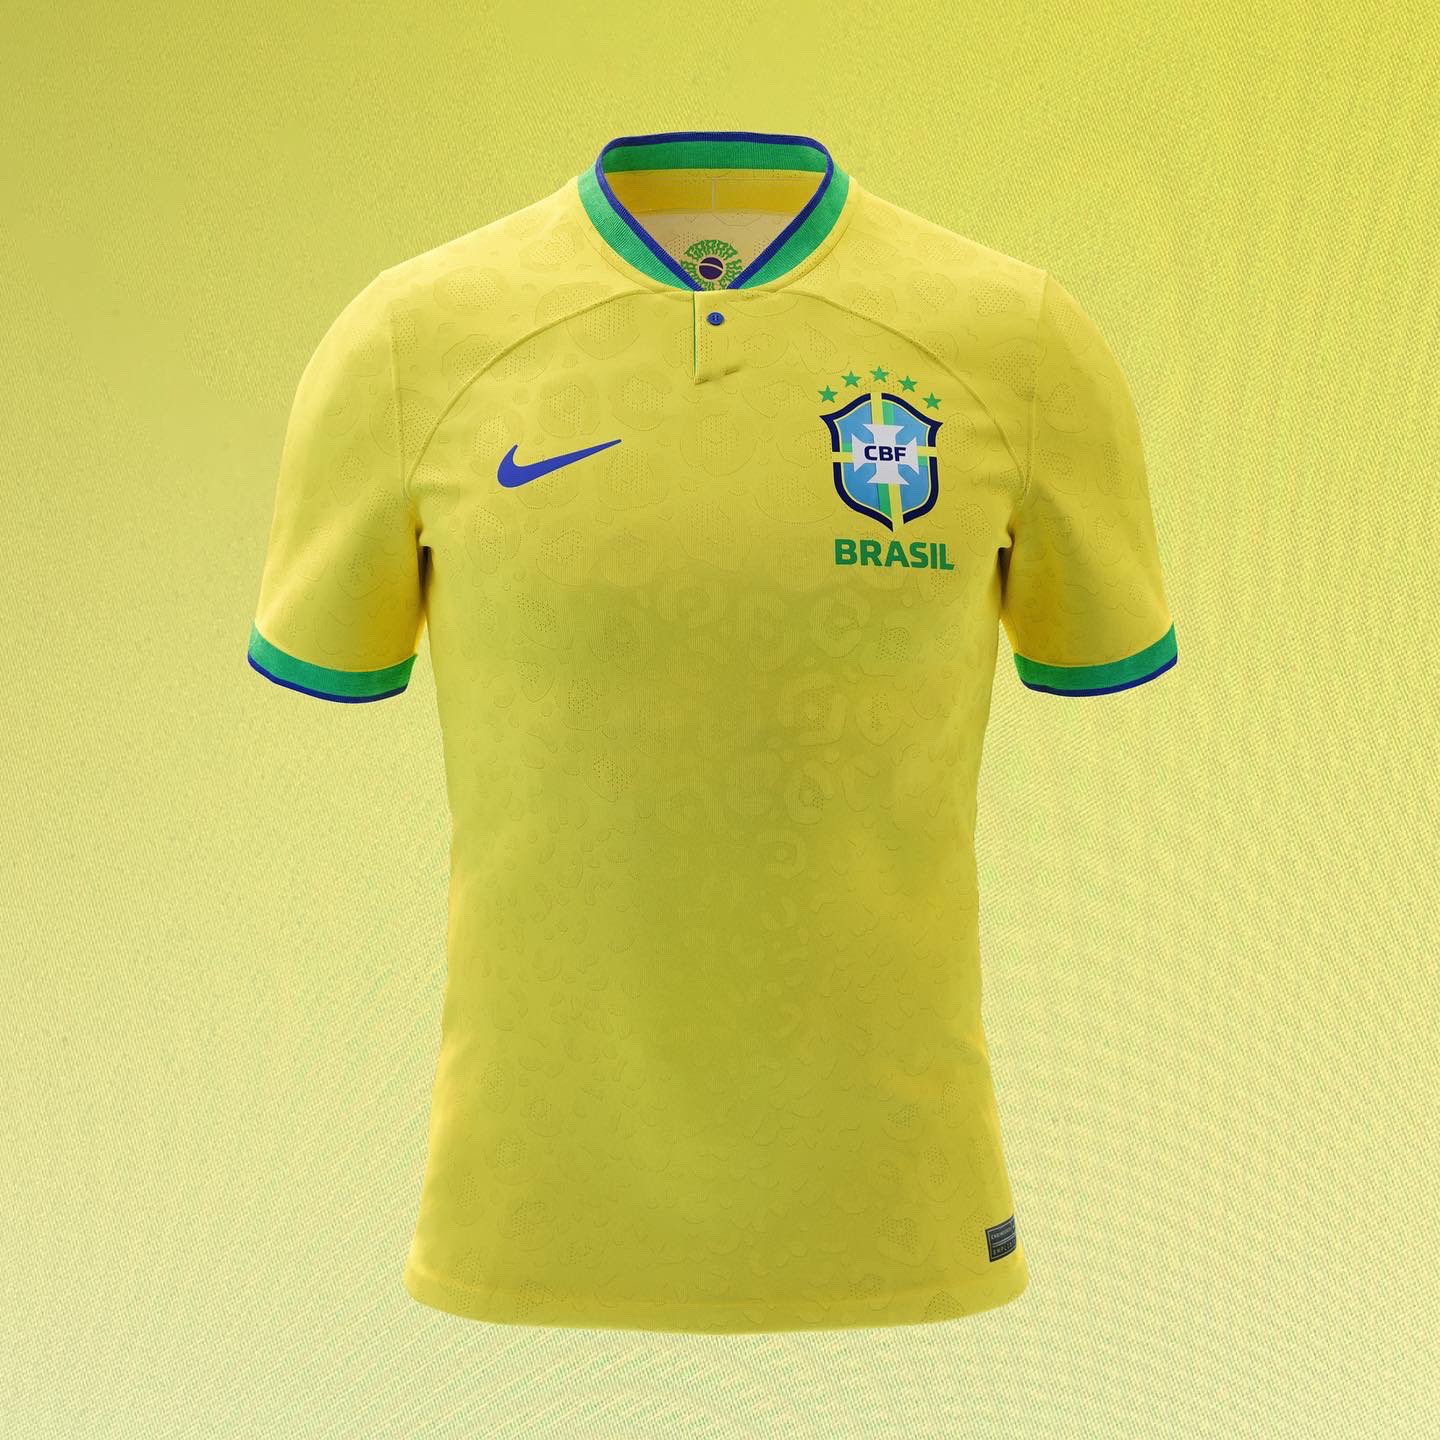 Todo Sobre Camisetas on Twitter: Brasil presentó sus camisetas @nikefootball para el Mundial de Qatar 2022: https://t.co/SmdEUE1ydr Twitter